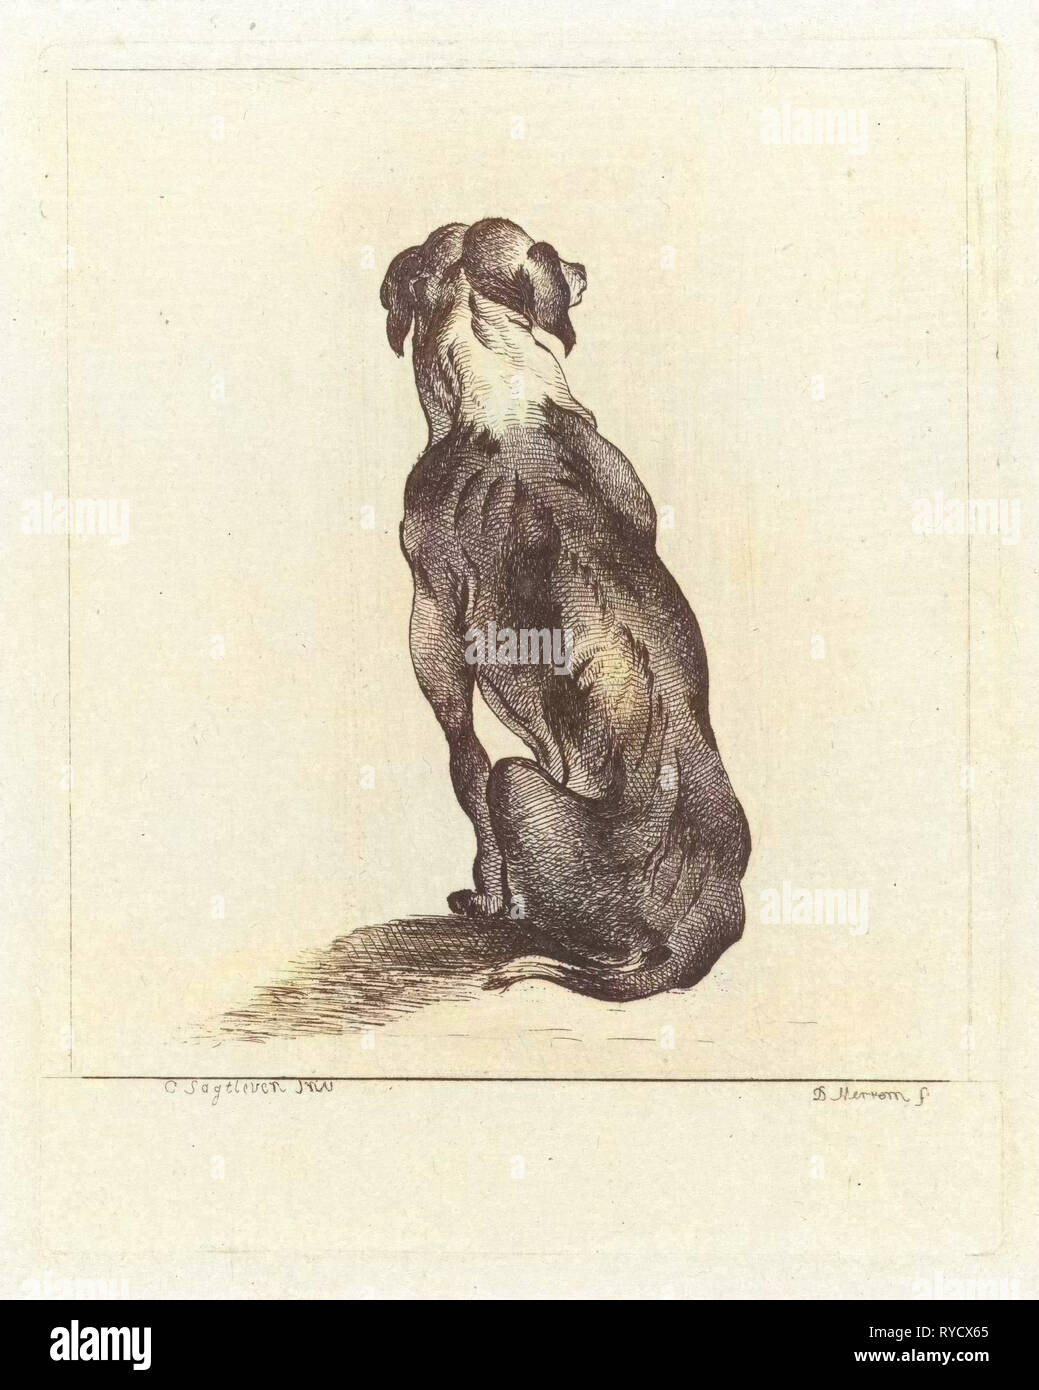 Udienza cane, D. Merrem, 1700 - 1800 Foto Stock